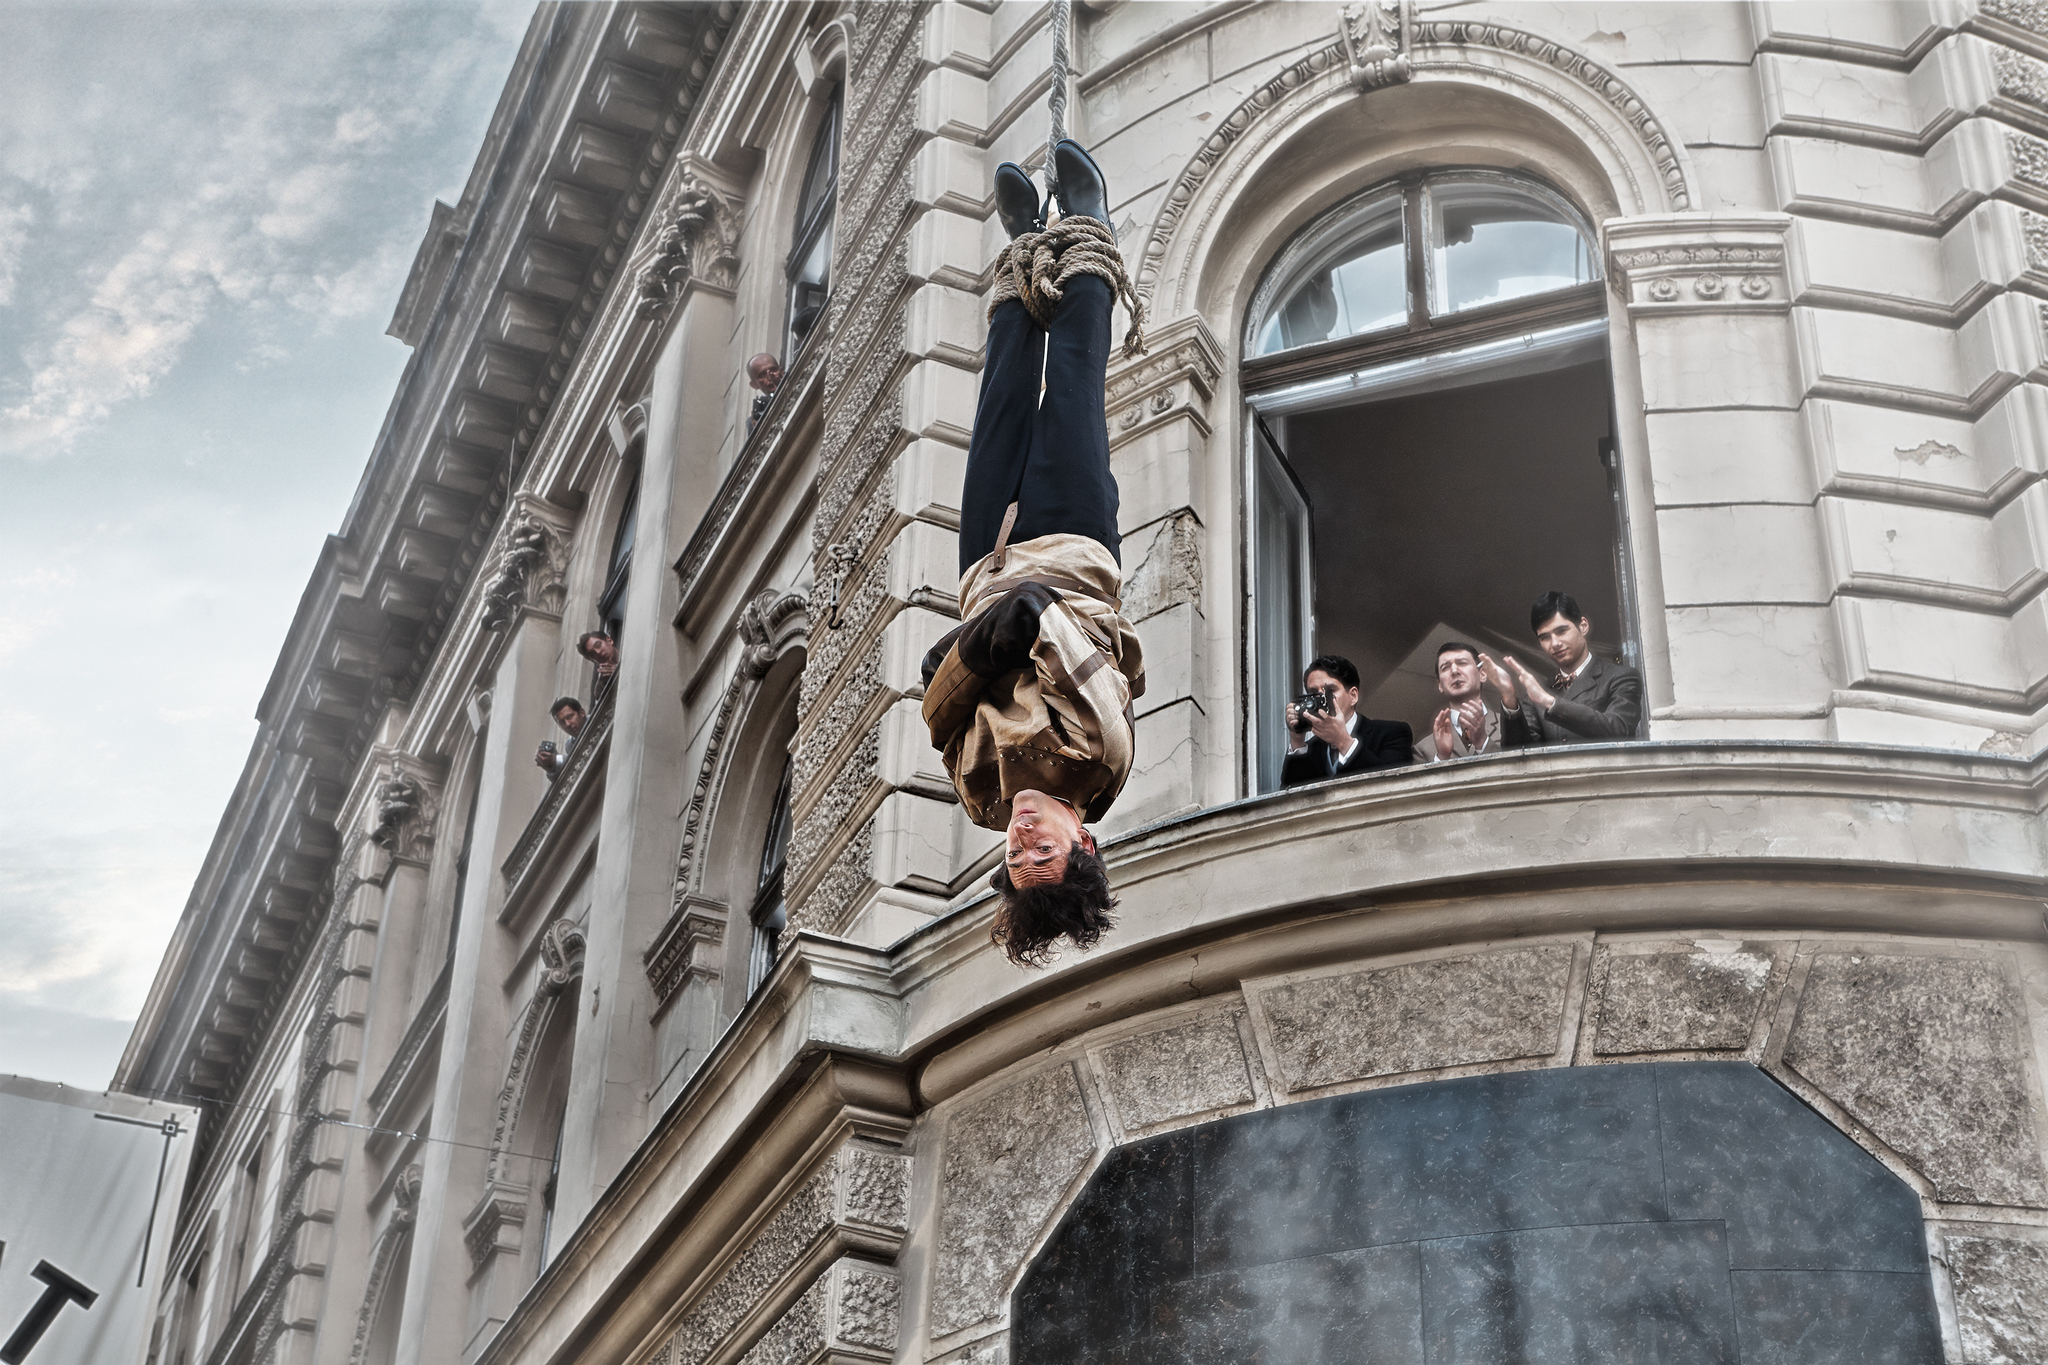 Still of Adrien Brody in Houdini (2014)